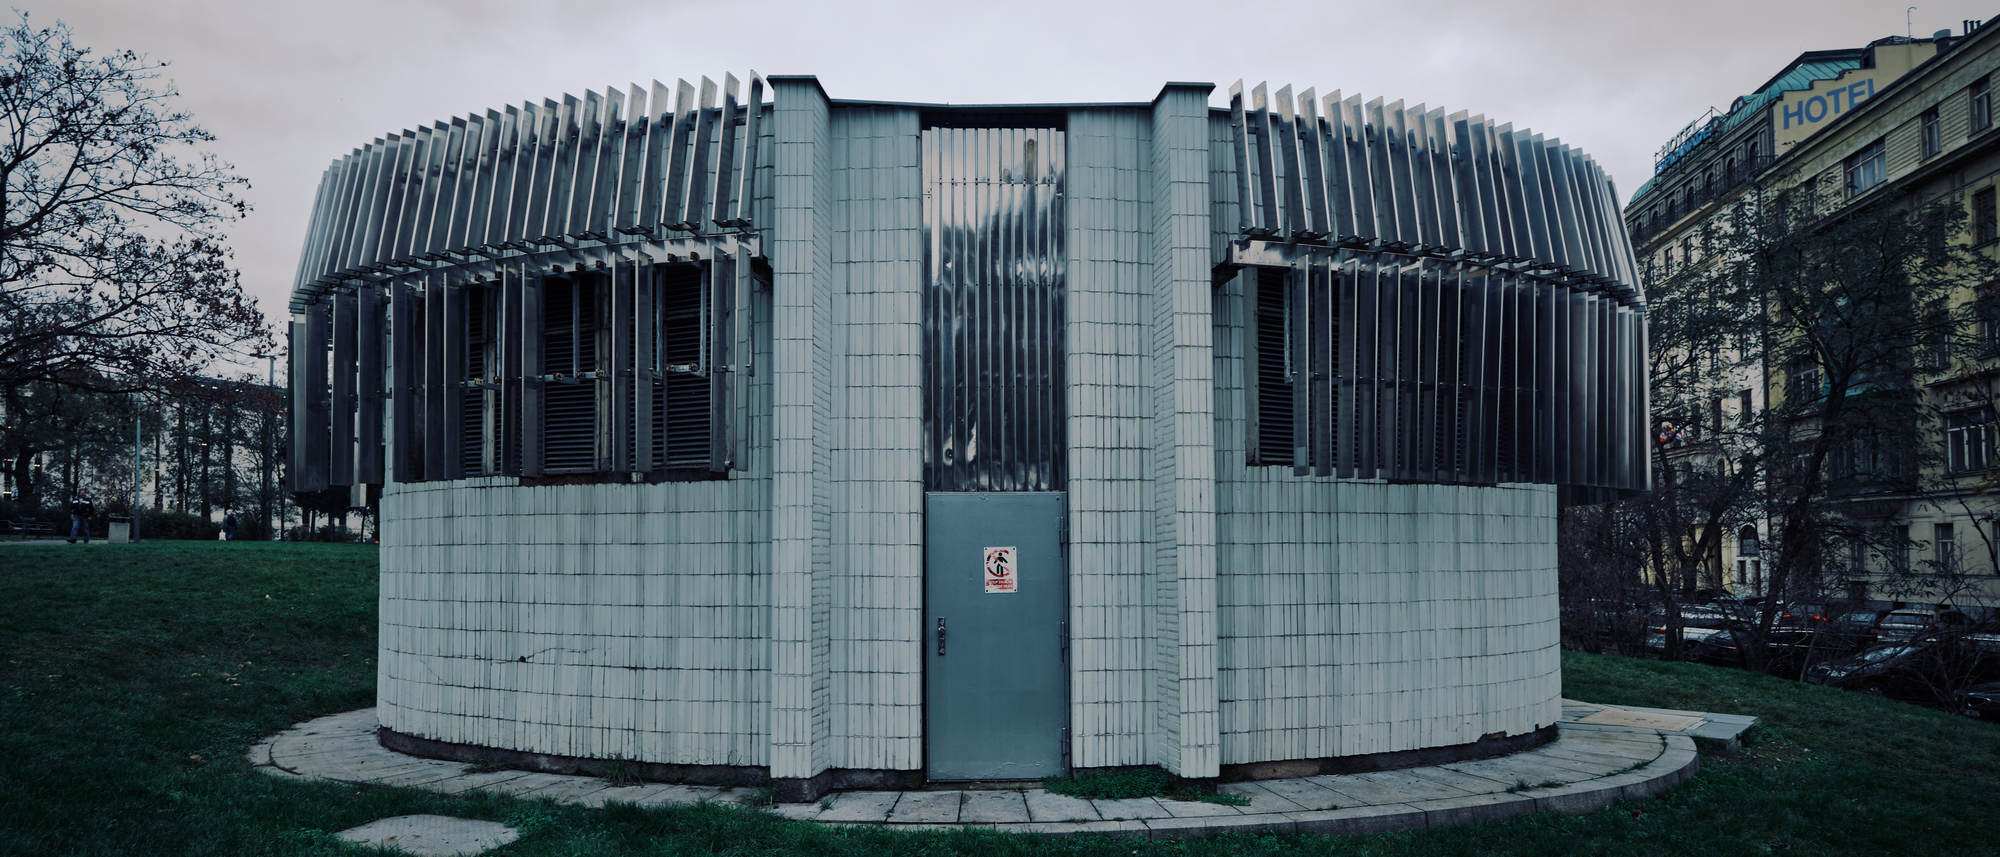 Praha - Substation or Alien Craft?